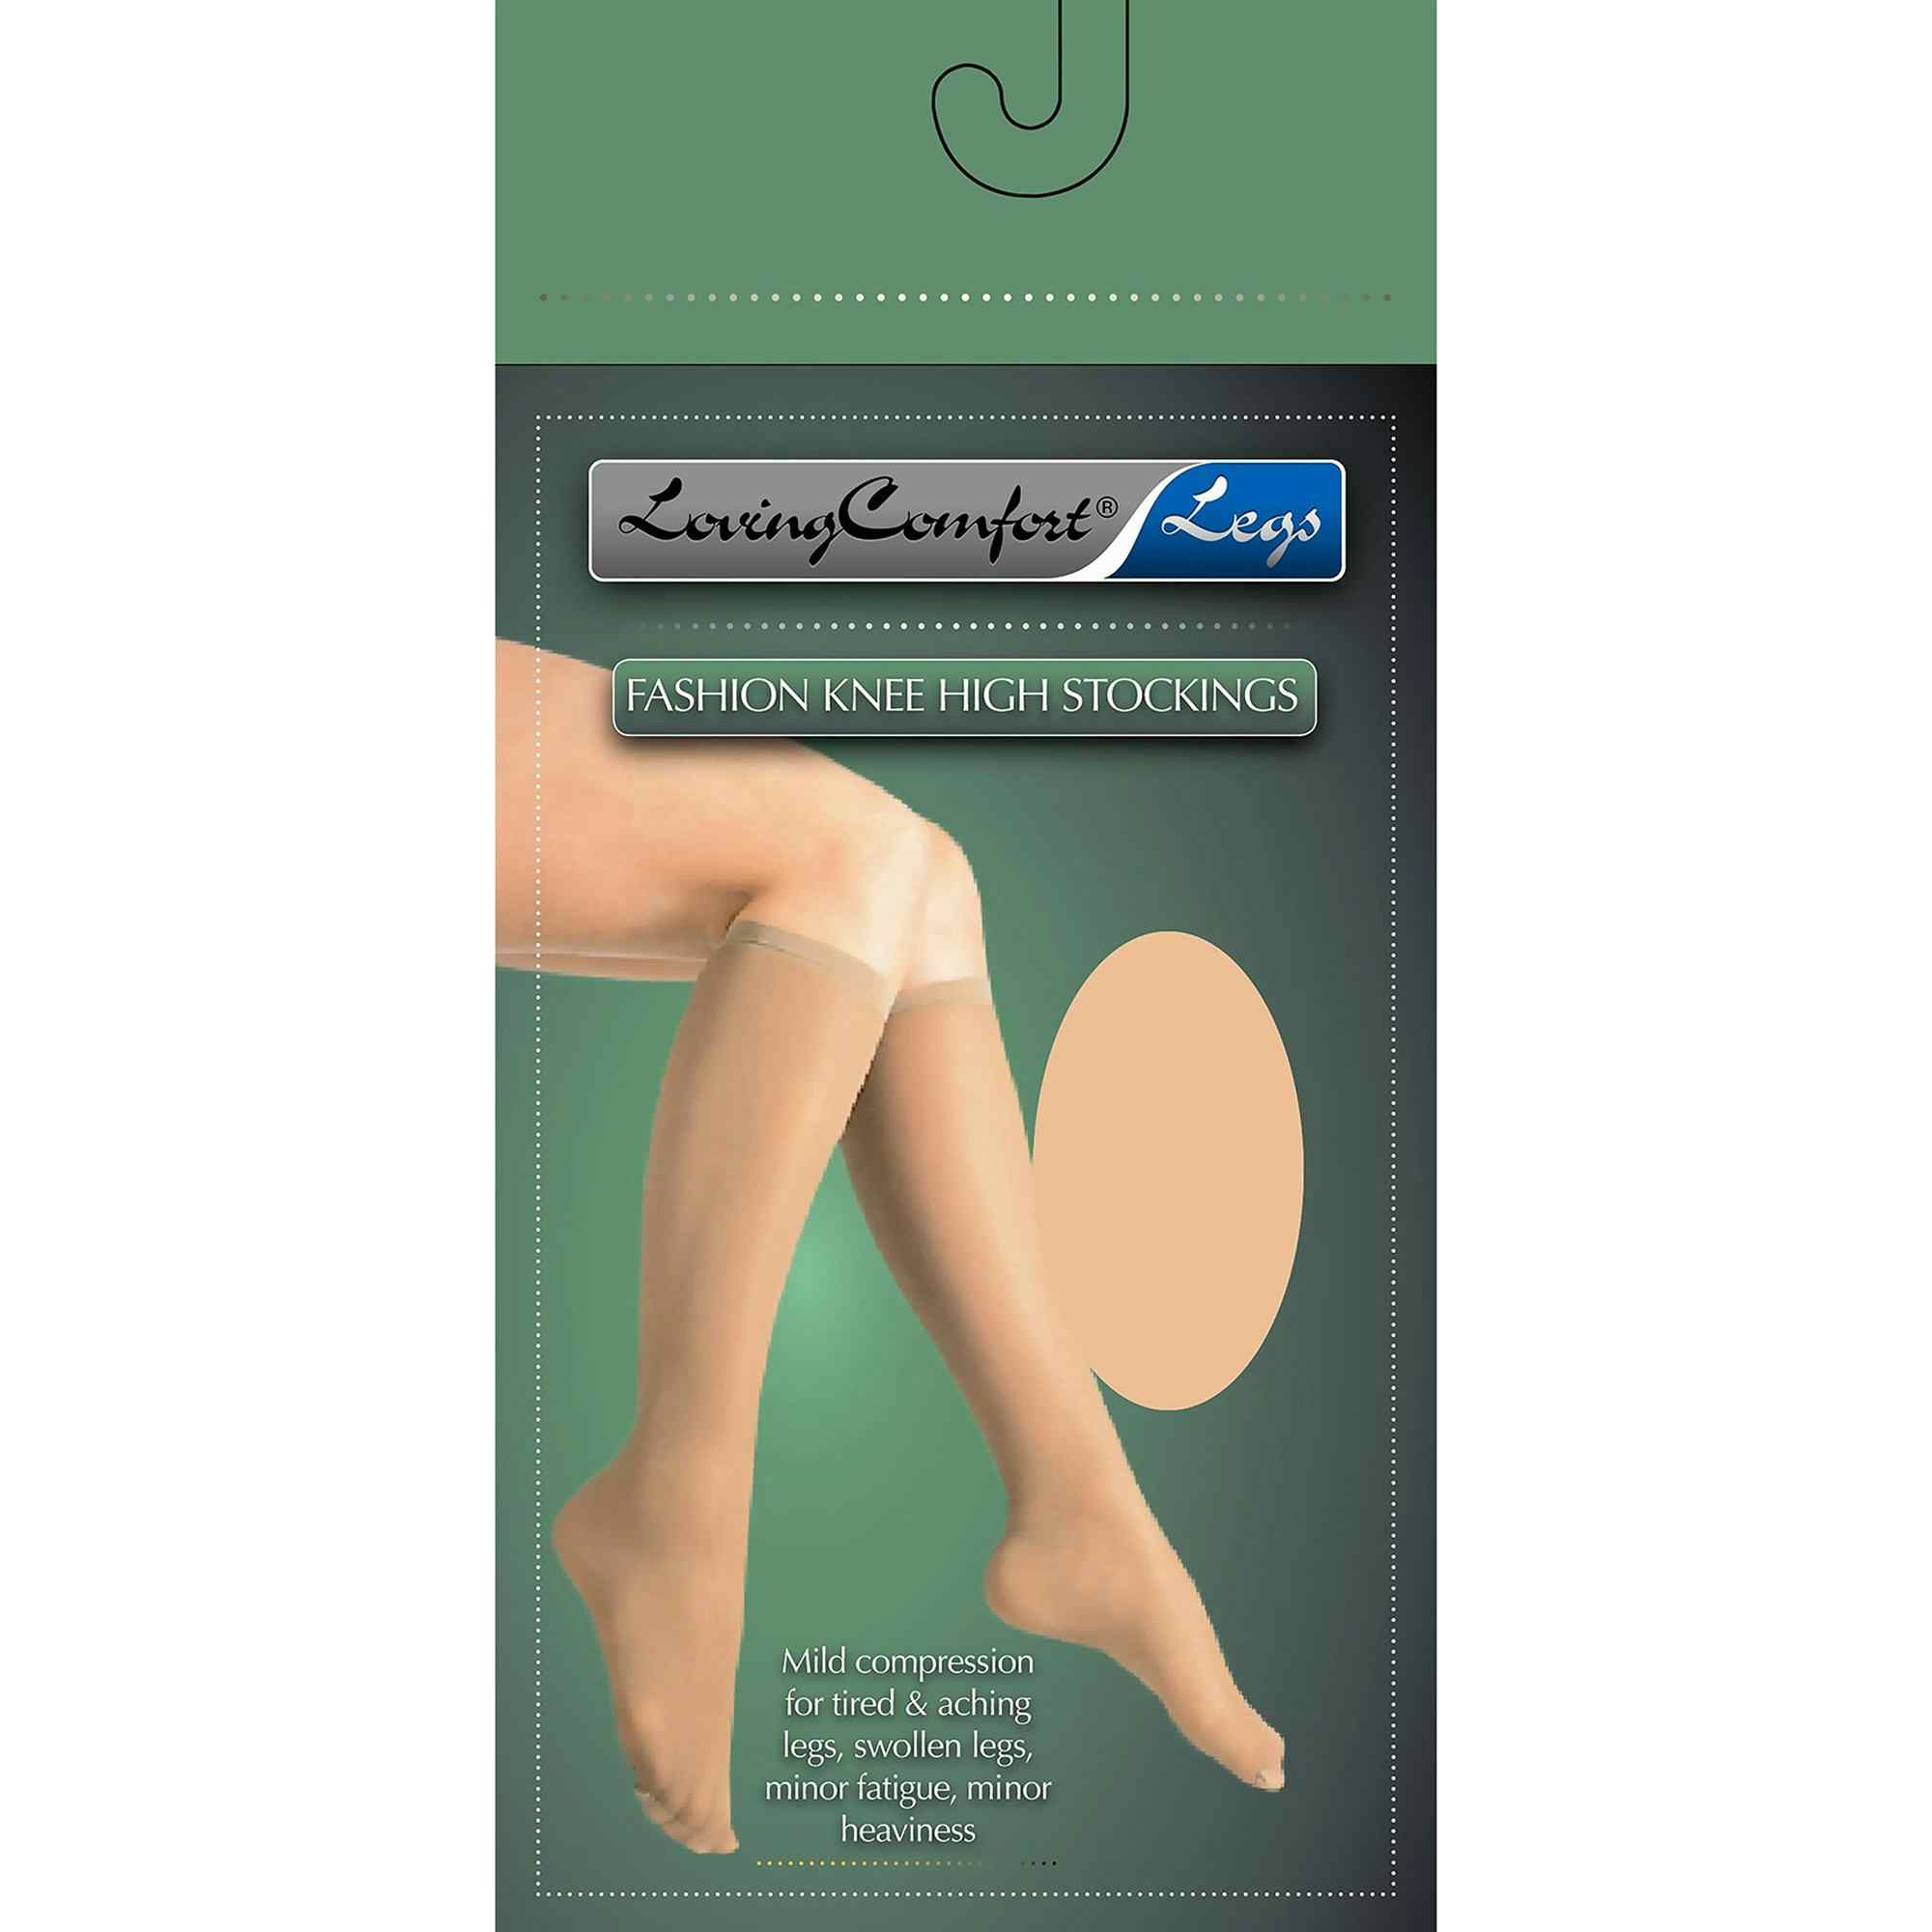 Loving Comfort Legs Fashion Knee High Stockings , 1670 BEI XL, Beige - X-Large - 2 Pairs